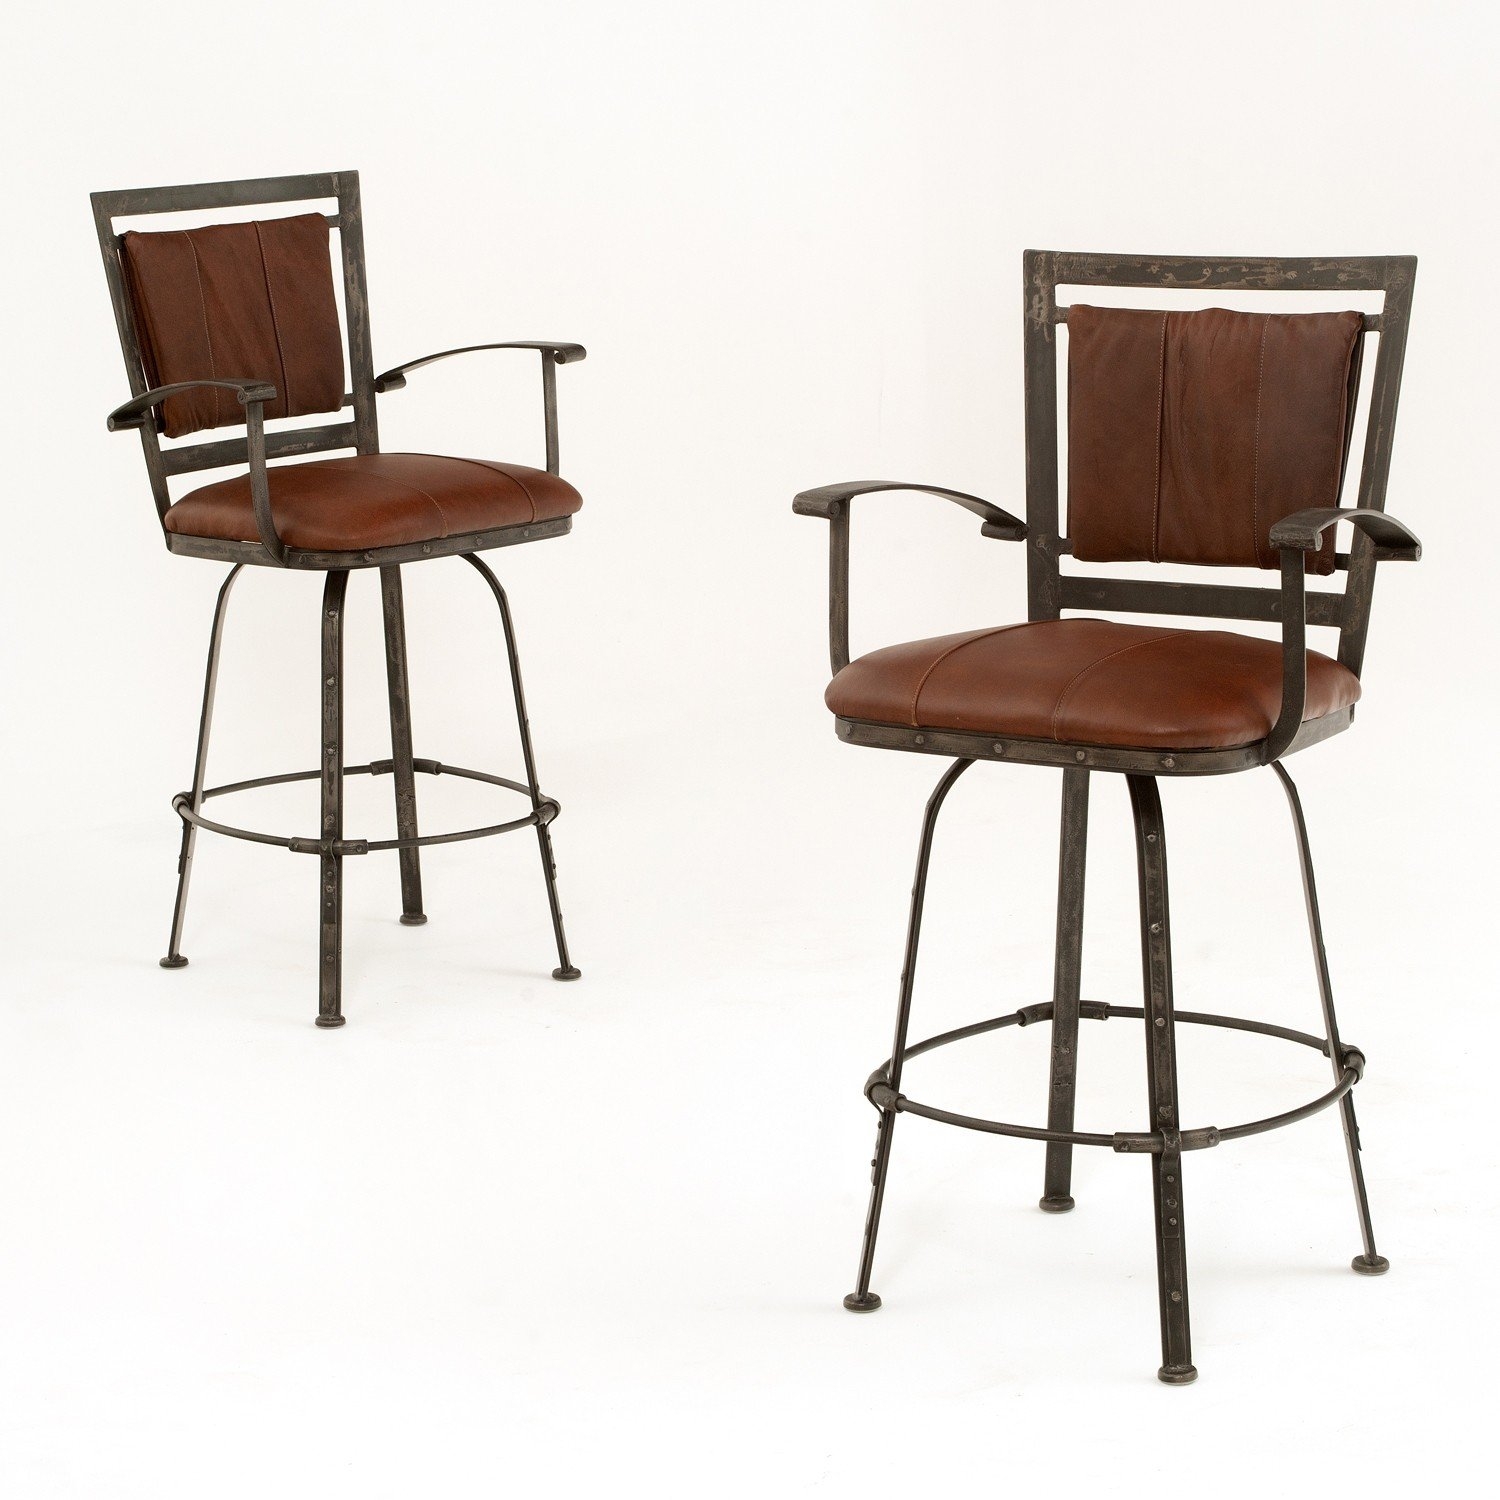 Rustic furniture bar stool design 1 read more details rustic